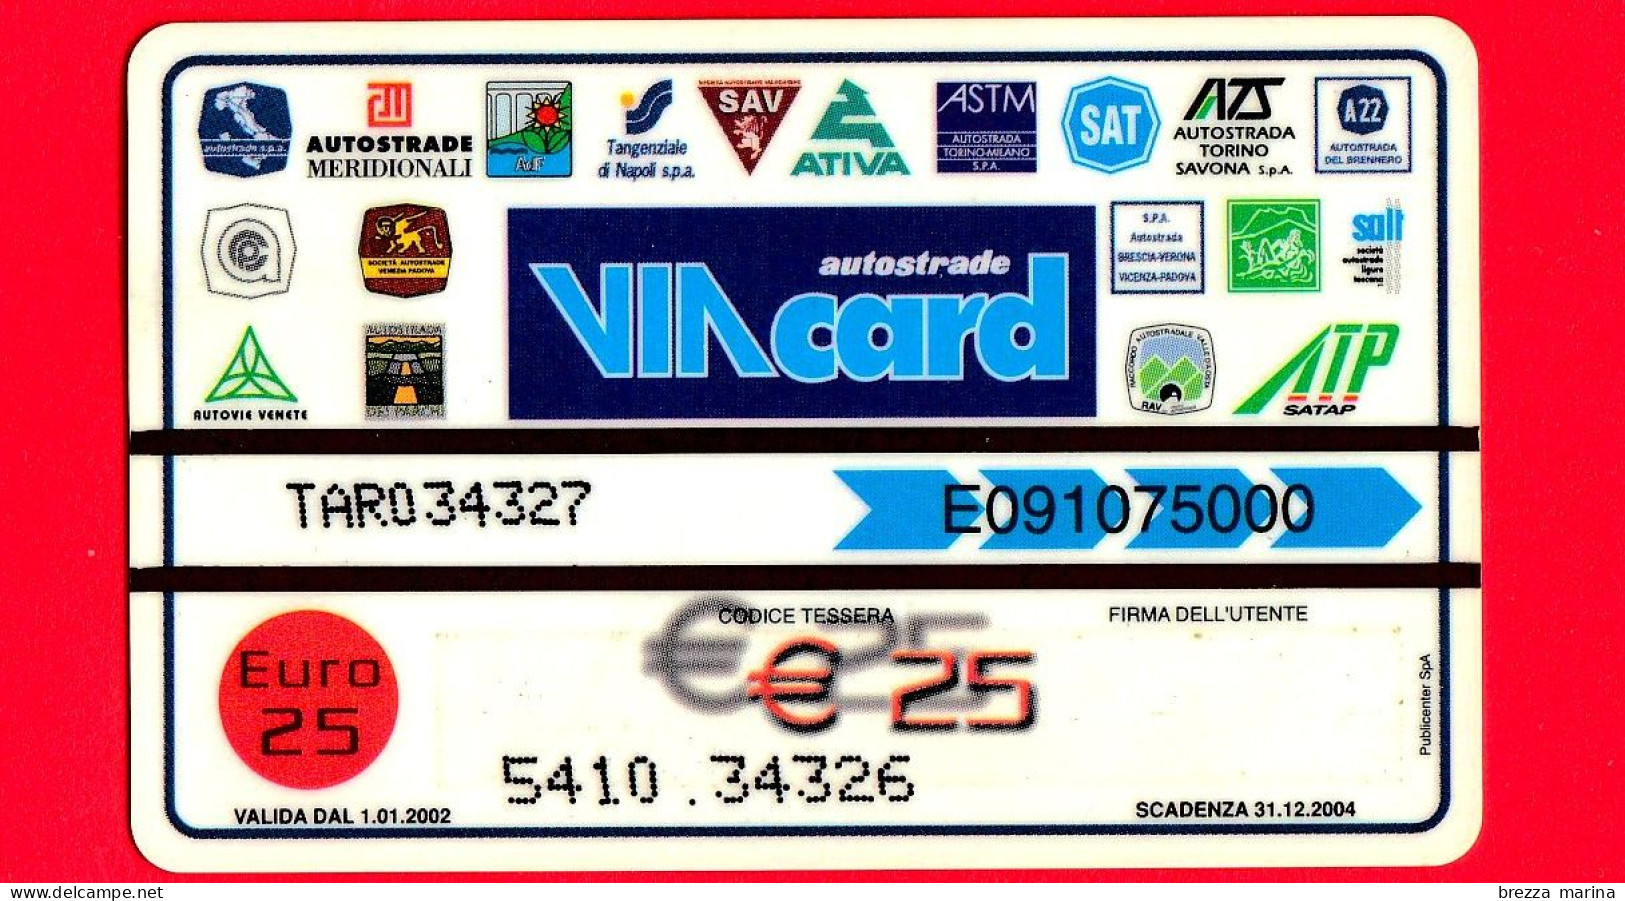 VIACARD -  Viacard Pubblicitarie - Tarvisio 2003 - I Poli Sciistici -  Tessera N. 1331 - 25 - Pub - 09.2001 - Other & Unclassified